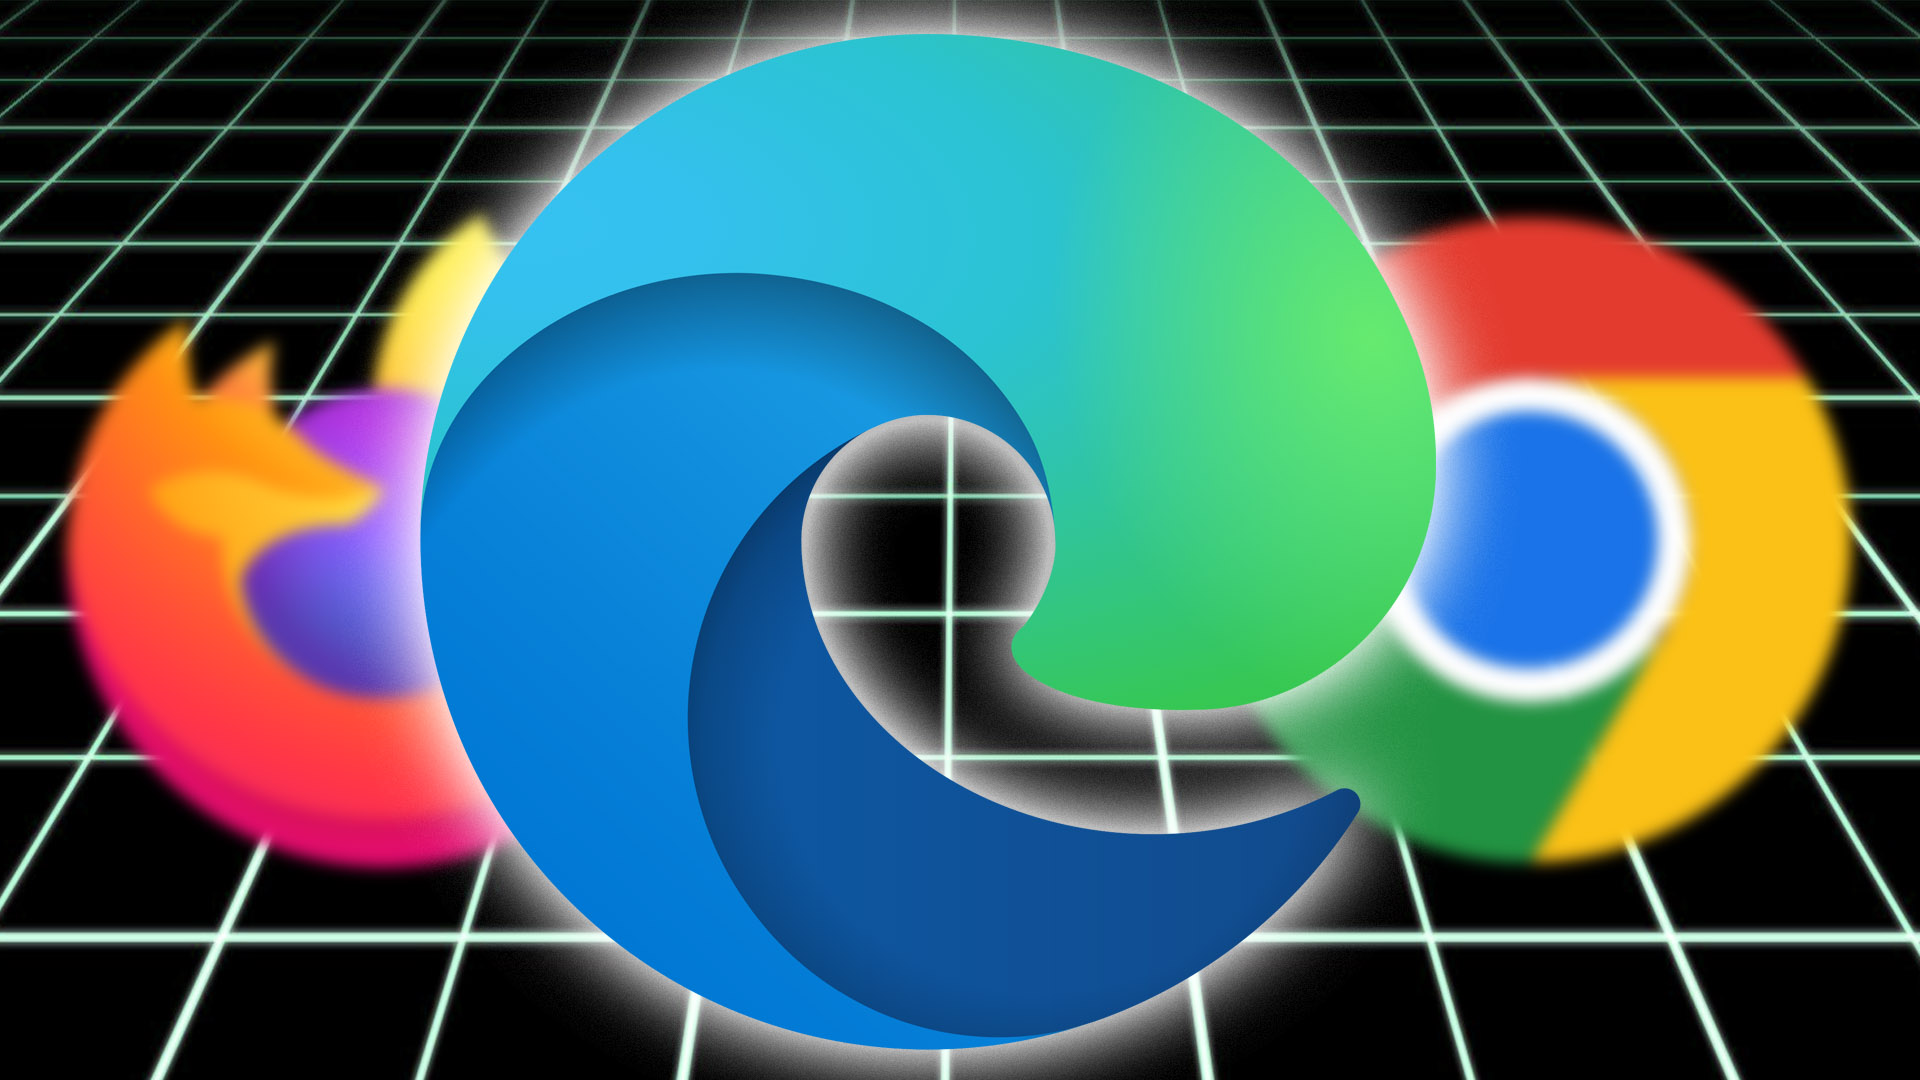 Edge logo over Firefox and Chrome